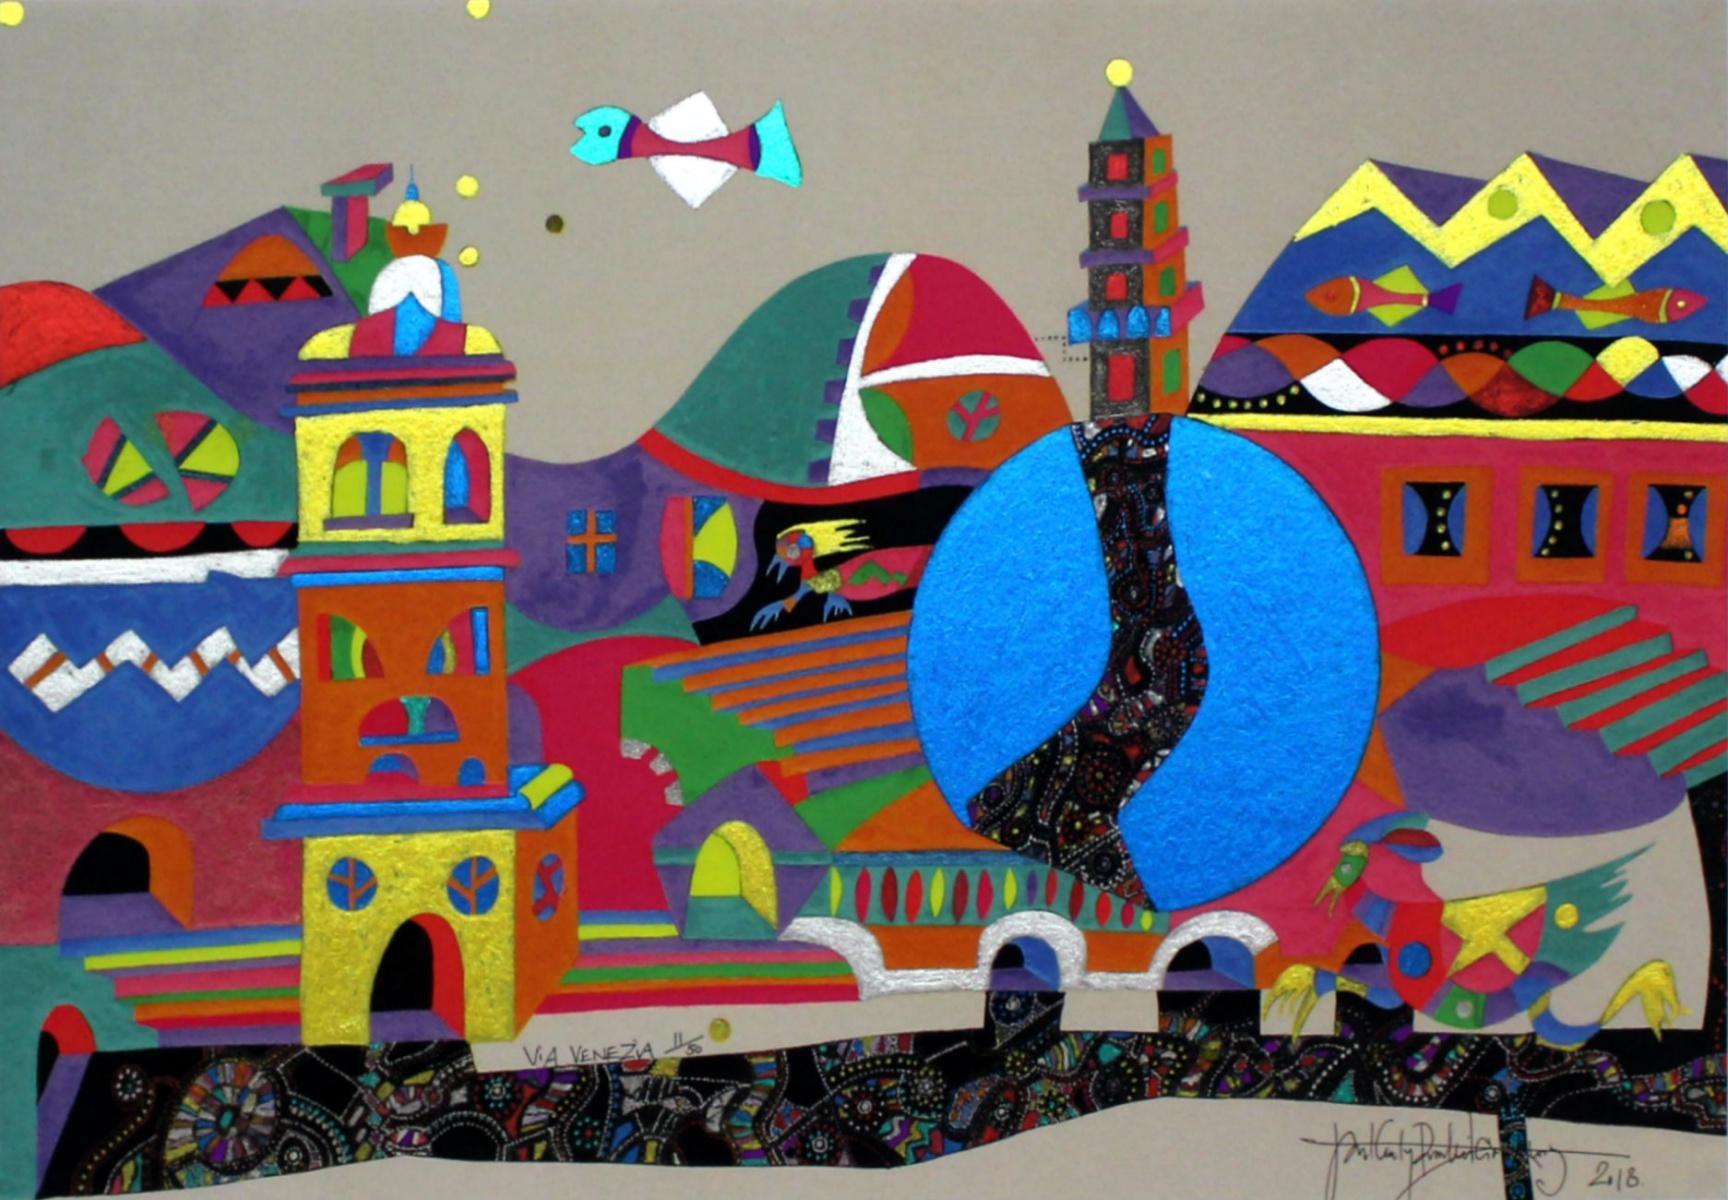 Jan Kanty Pawluśkiewicz Abstract Print - Via Venezia - XXI century, Mixed media, Abstract print, Colorful, Glittery